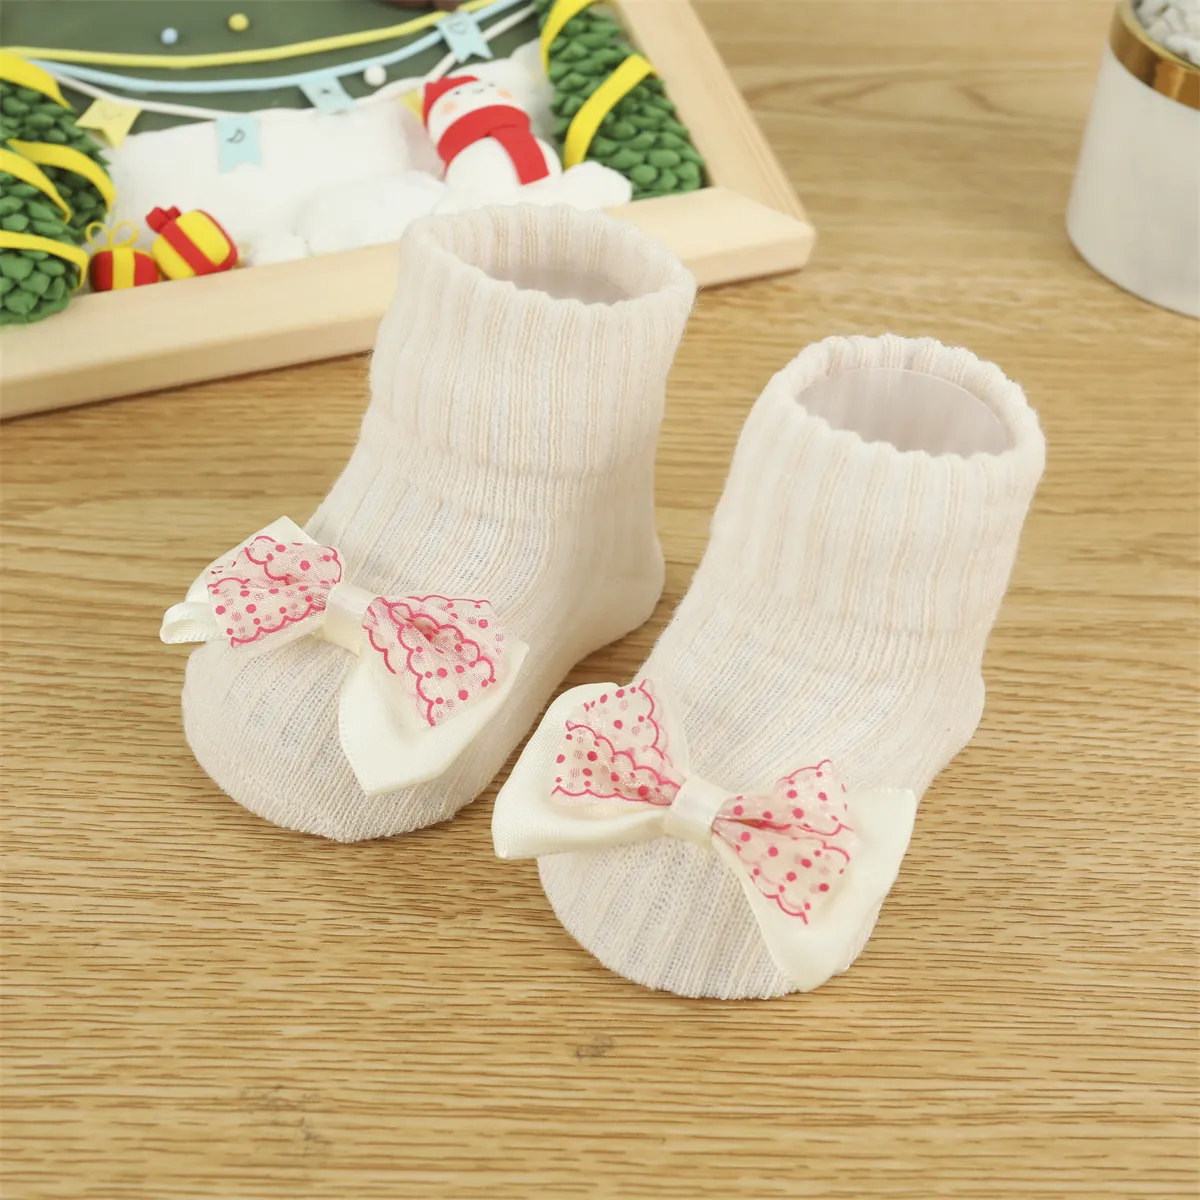 Baby/Toddler Cute 3D Animal Floral Cartoon Cotton Socks